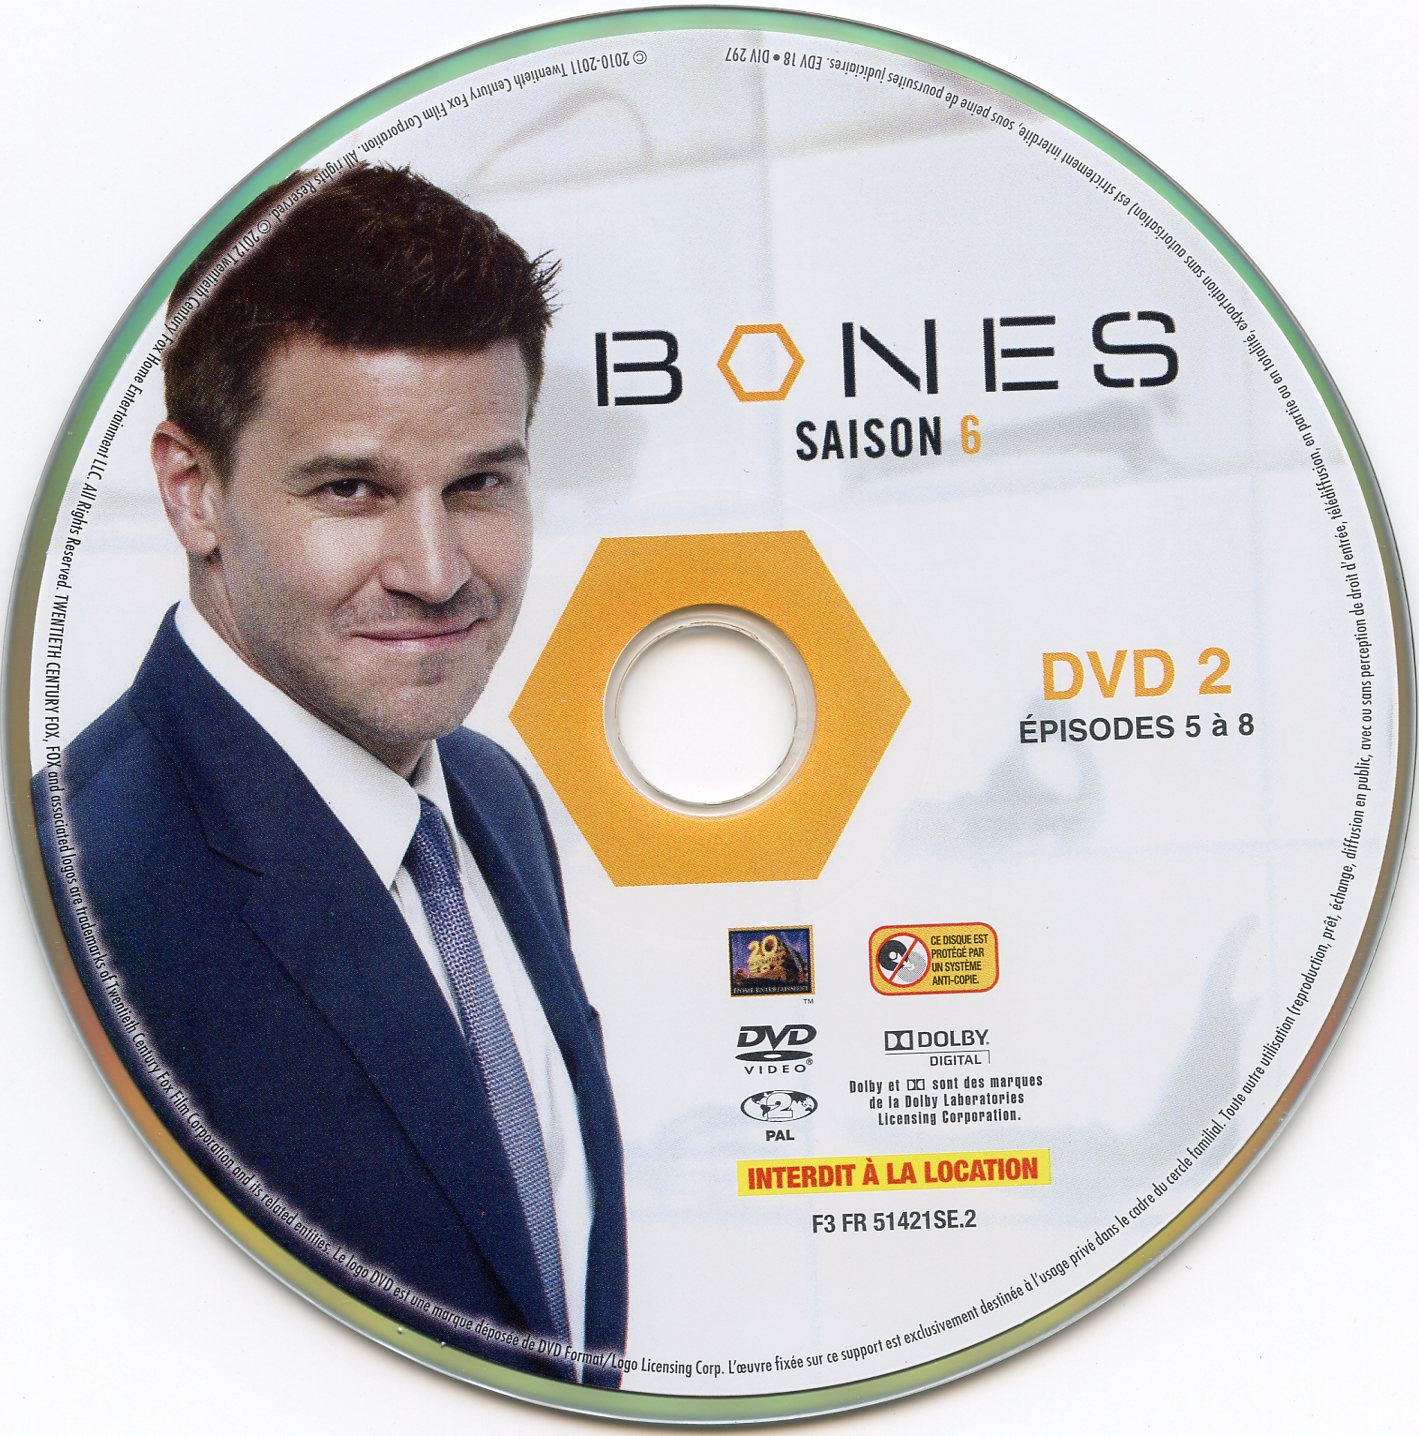 Bones Saison 6 DVD 2